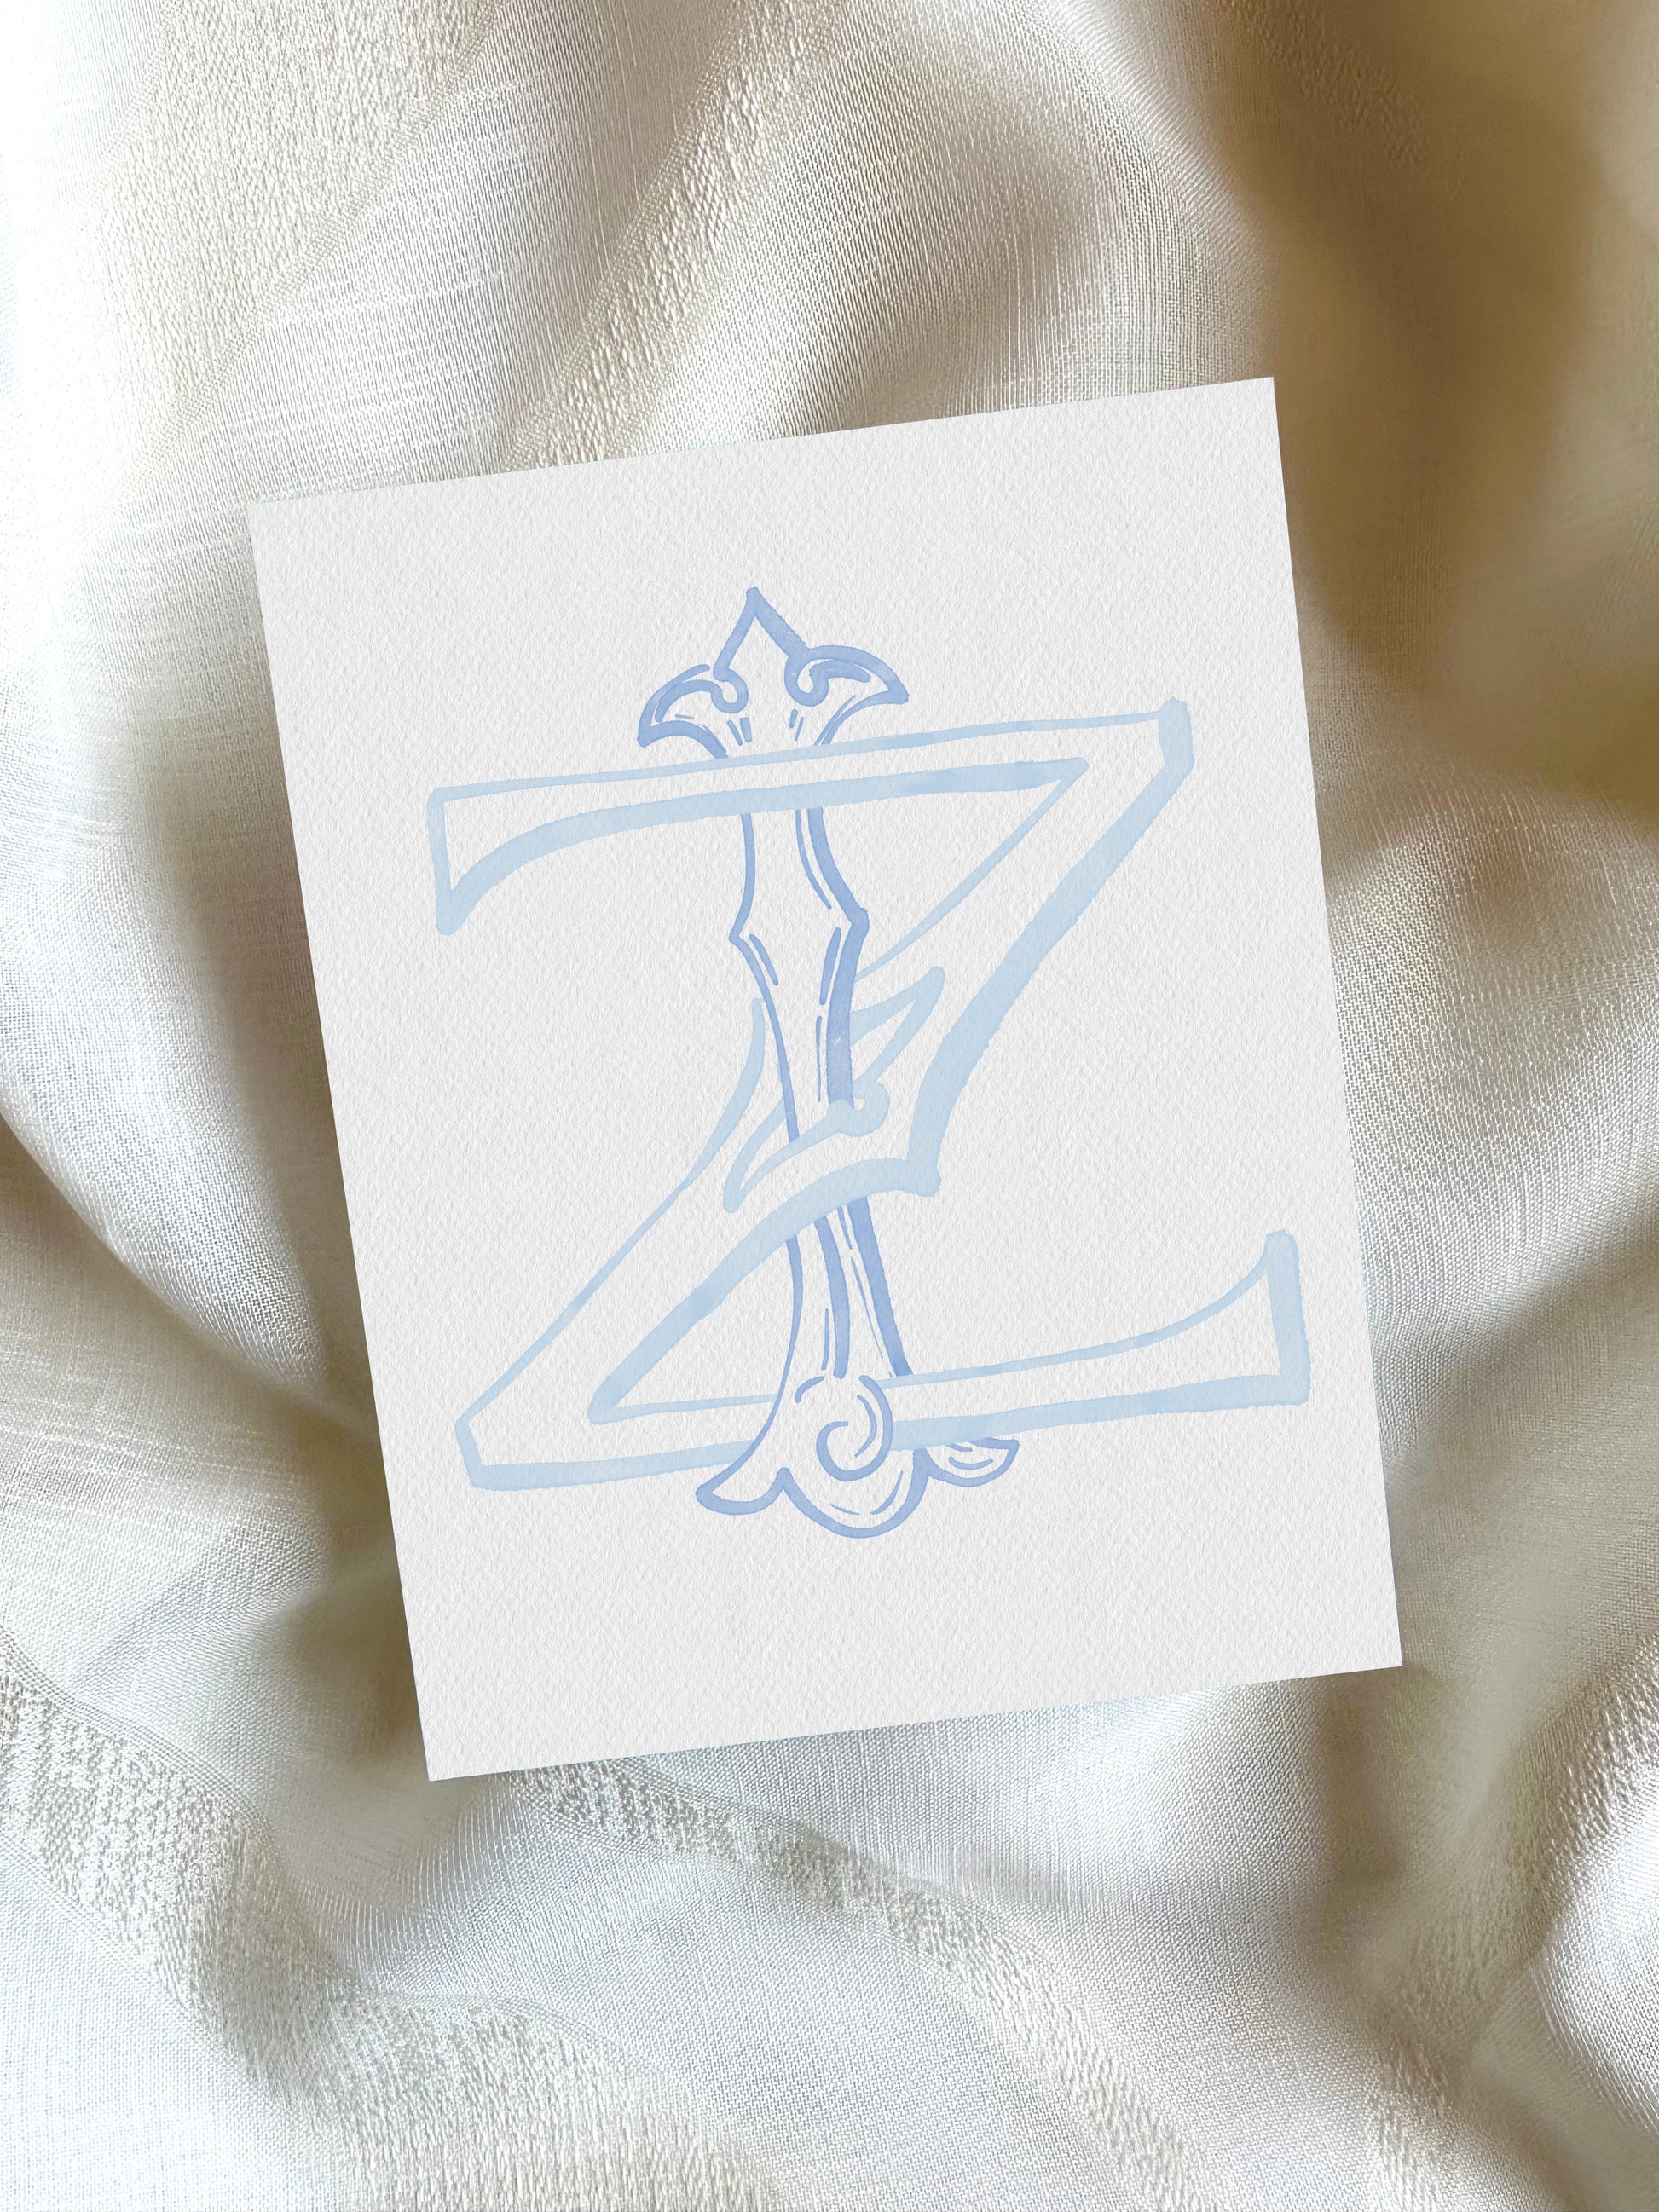 2 Letter Monogram with Letters IZ ZI | Digital Download - Wedding Monogram SVG, Personal Logo, Wedding Logo for Wedding Invitations The Wedding Crest Lab